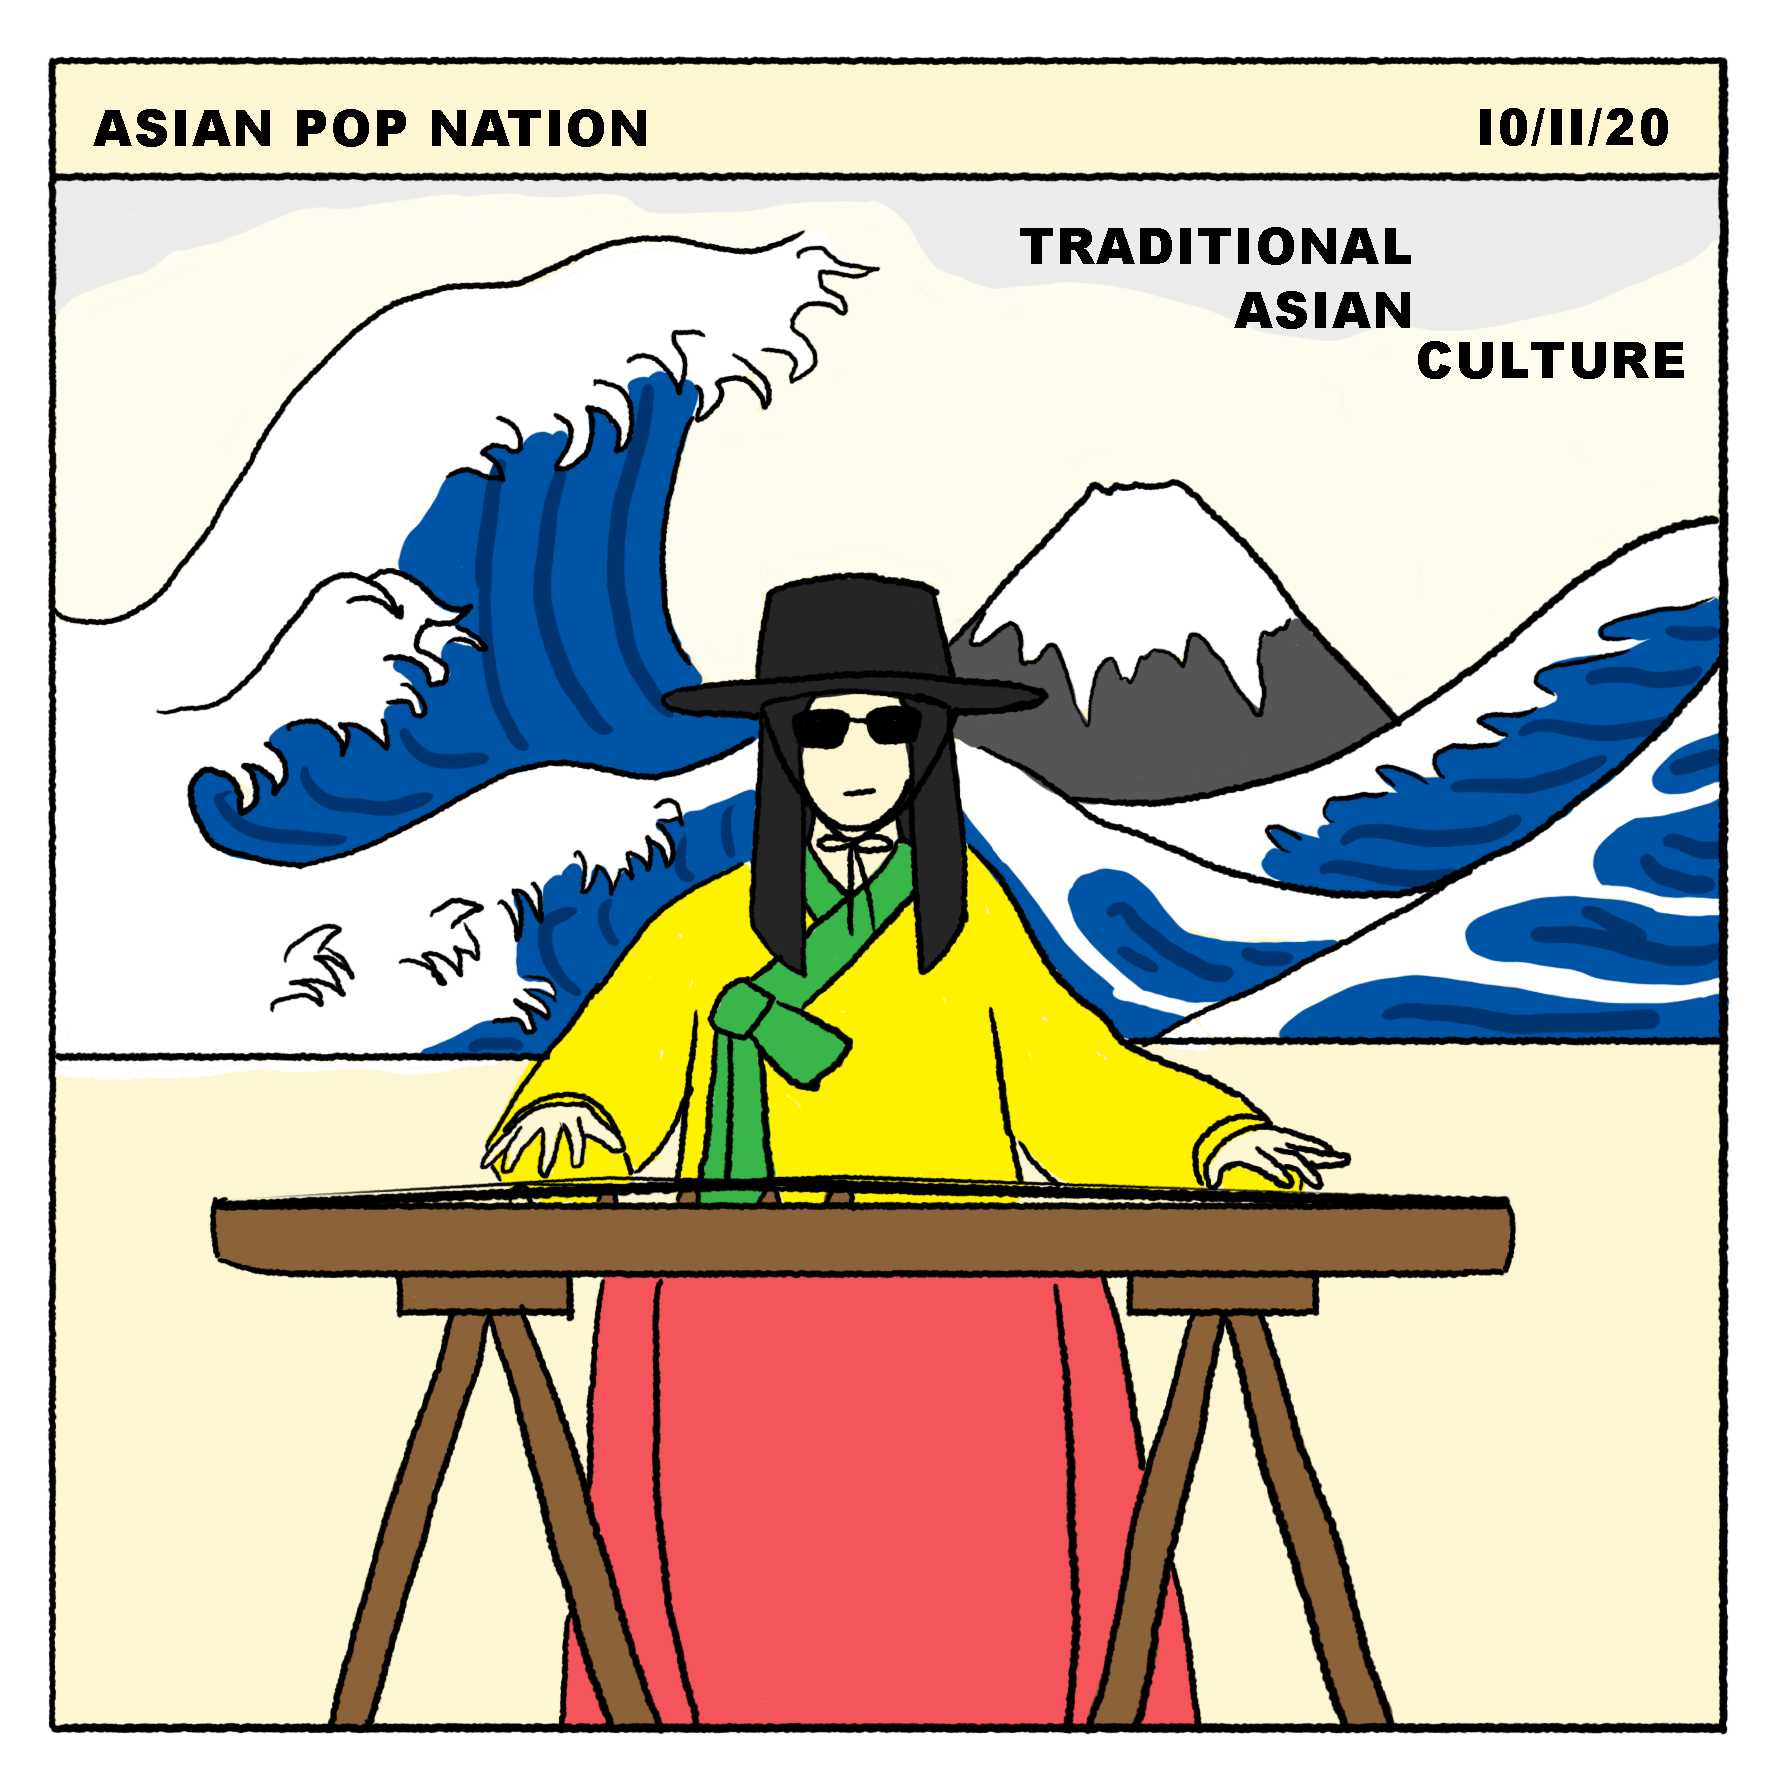 APN Season 4: Episode 7 (10/11/20) - Traditional Asian Culture